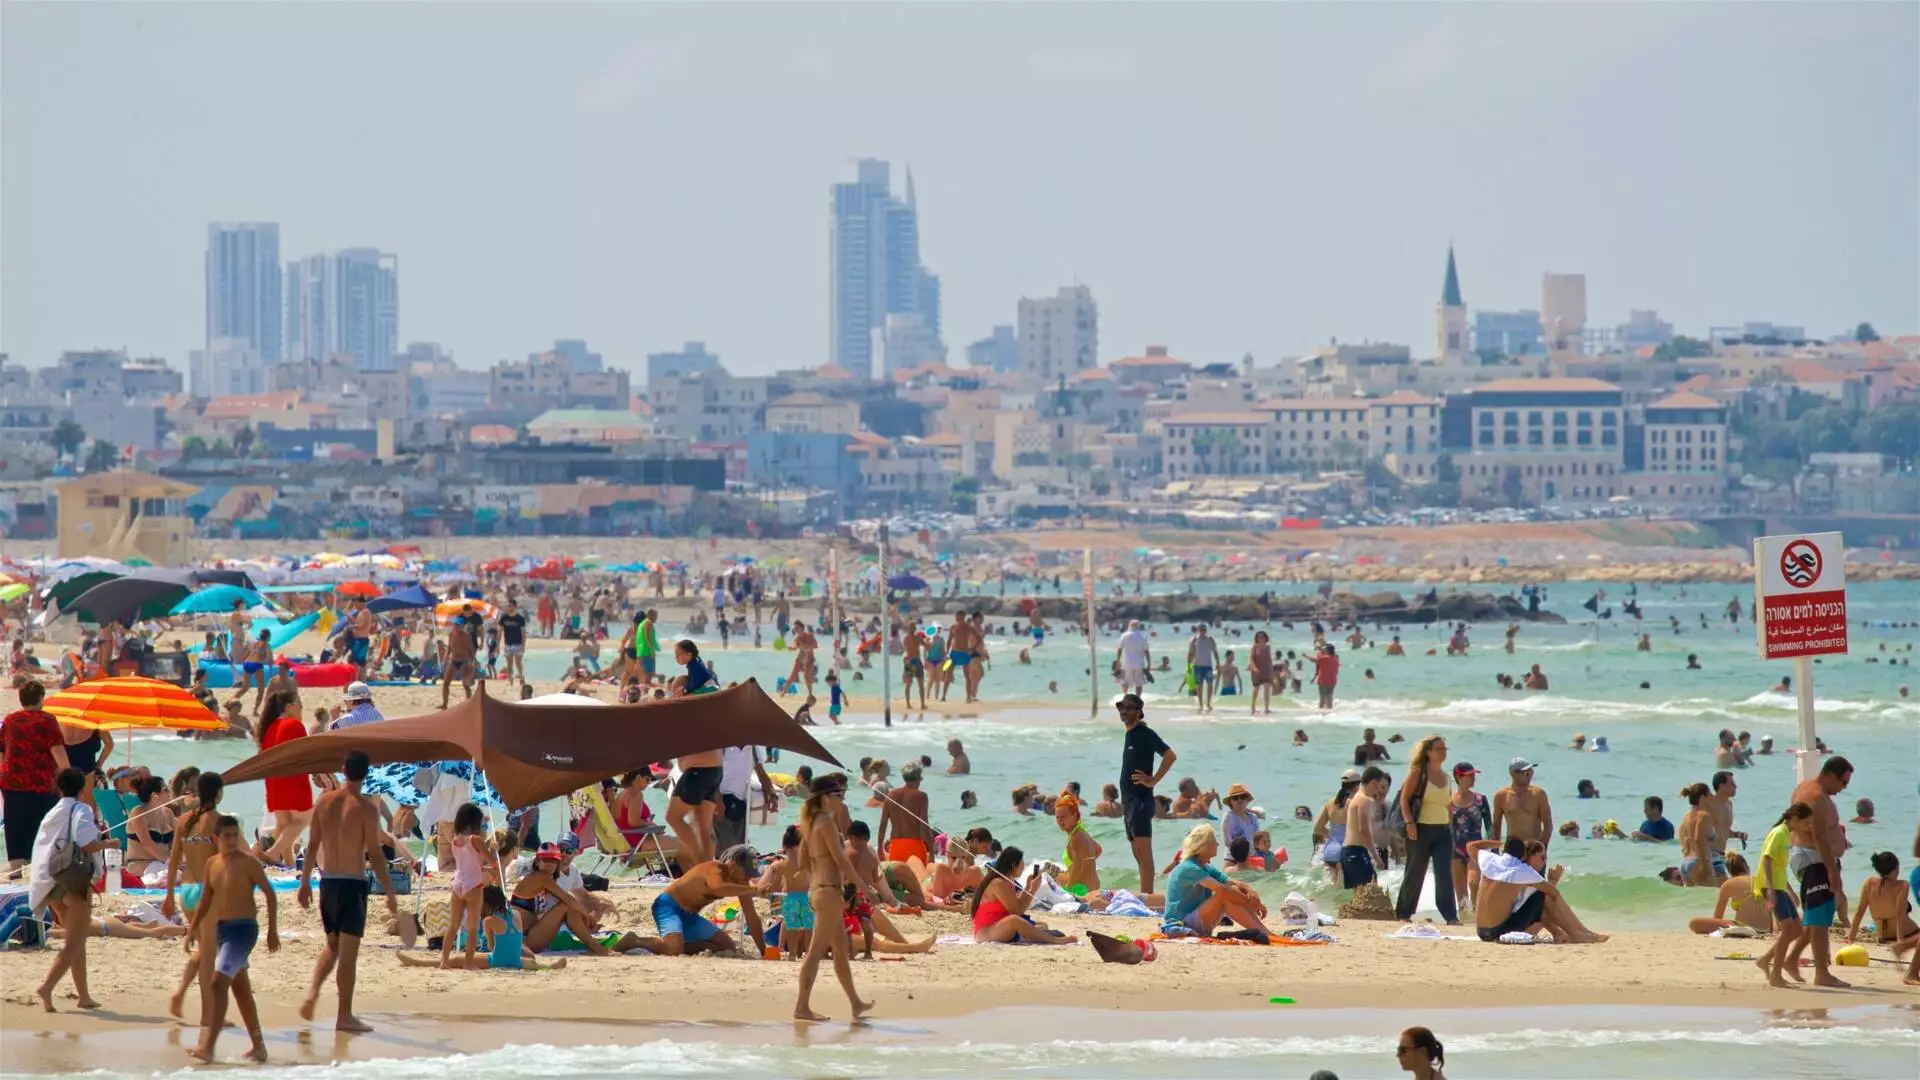 Tel Aviv And Vicinity On Tel Aviv In Israel